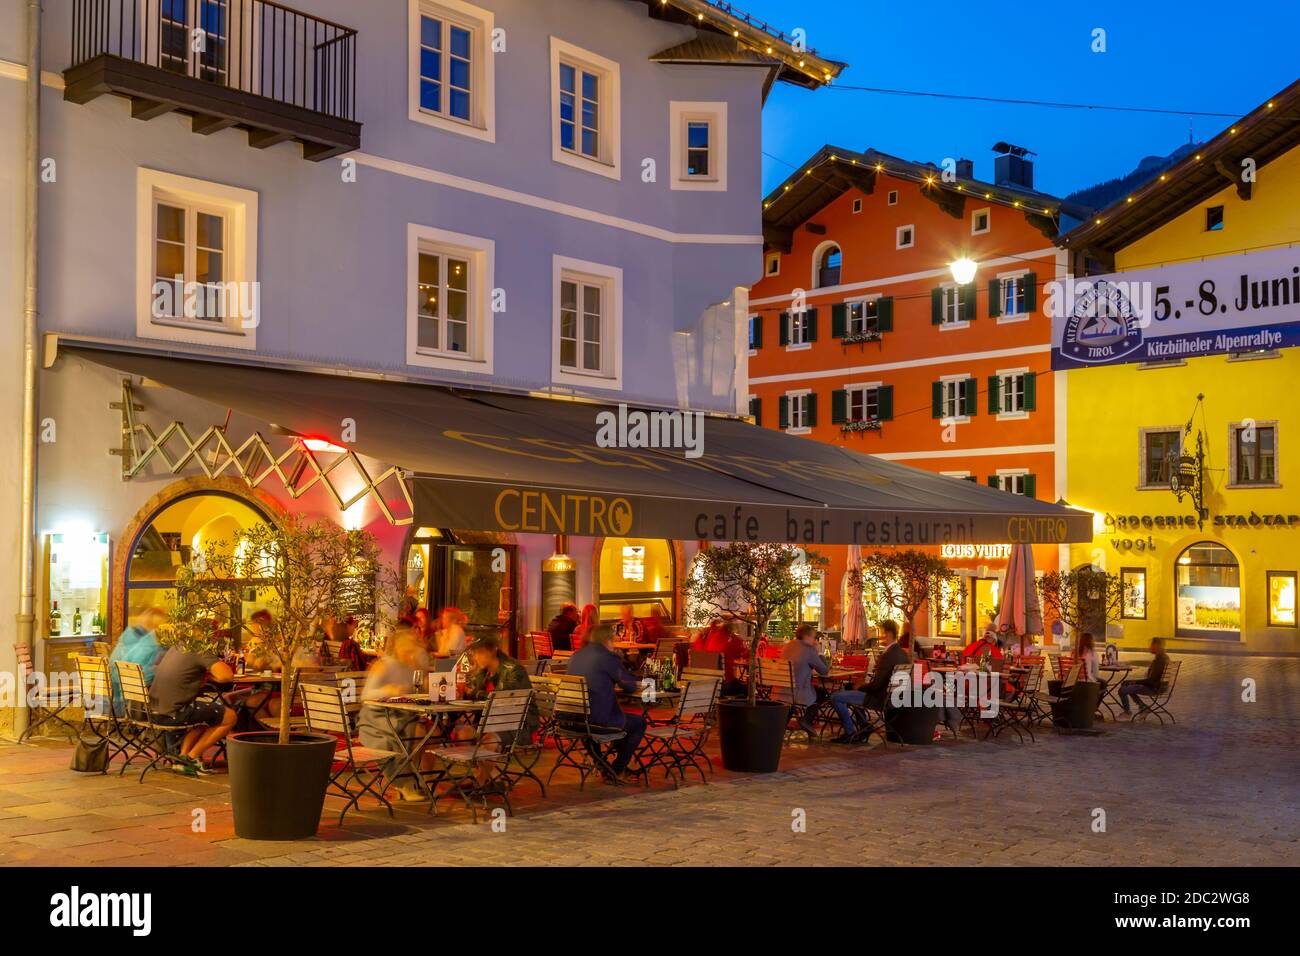 View of visitors enjoying drinks outside cafe on Vorderstadt at dusk, Kitzbuhel, Austrian Tyrol Region, Austria, Europe Stock Photo